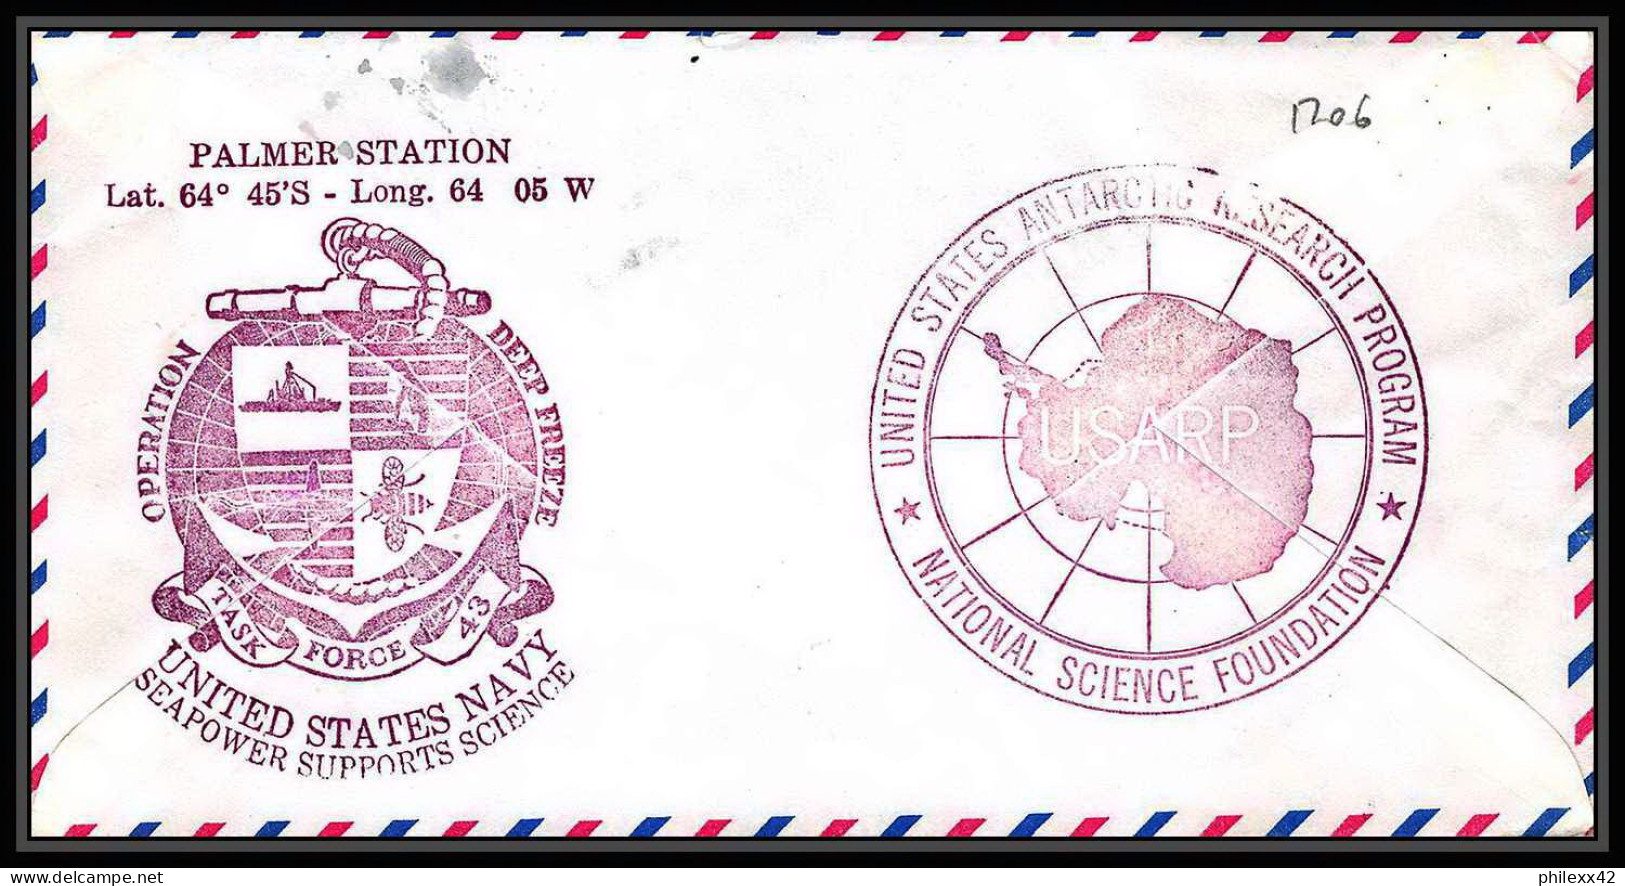 1206 Usa Enveloppe Lettre Cover Ship Hero 1972 Antarctic - Antarktis-Expeditionen